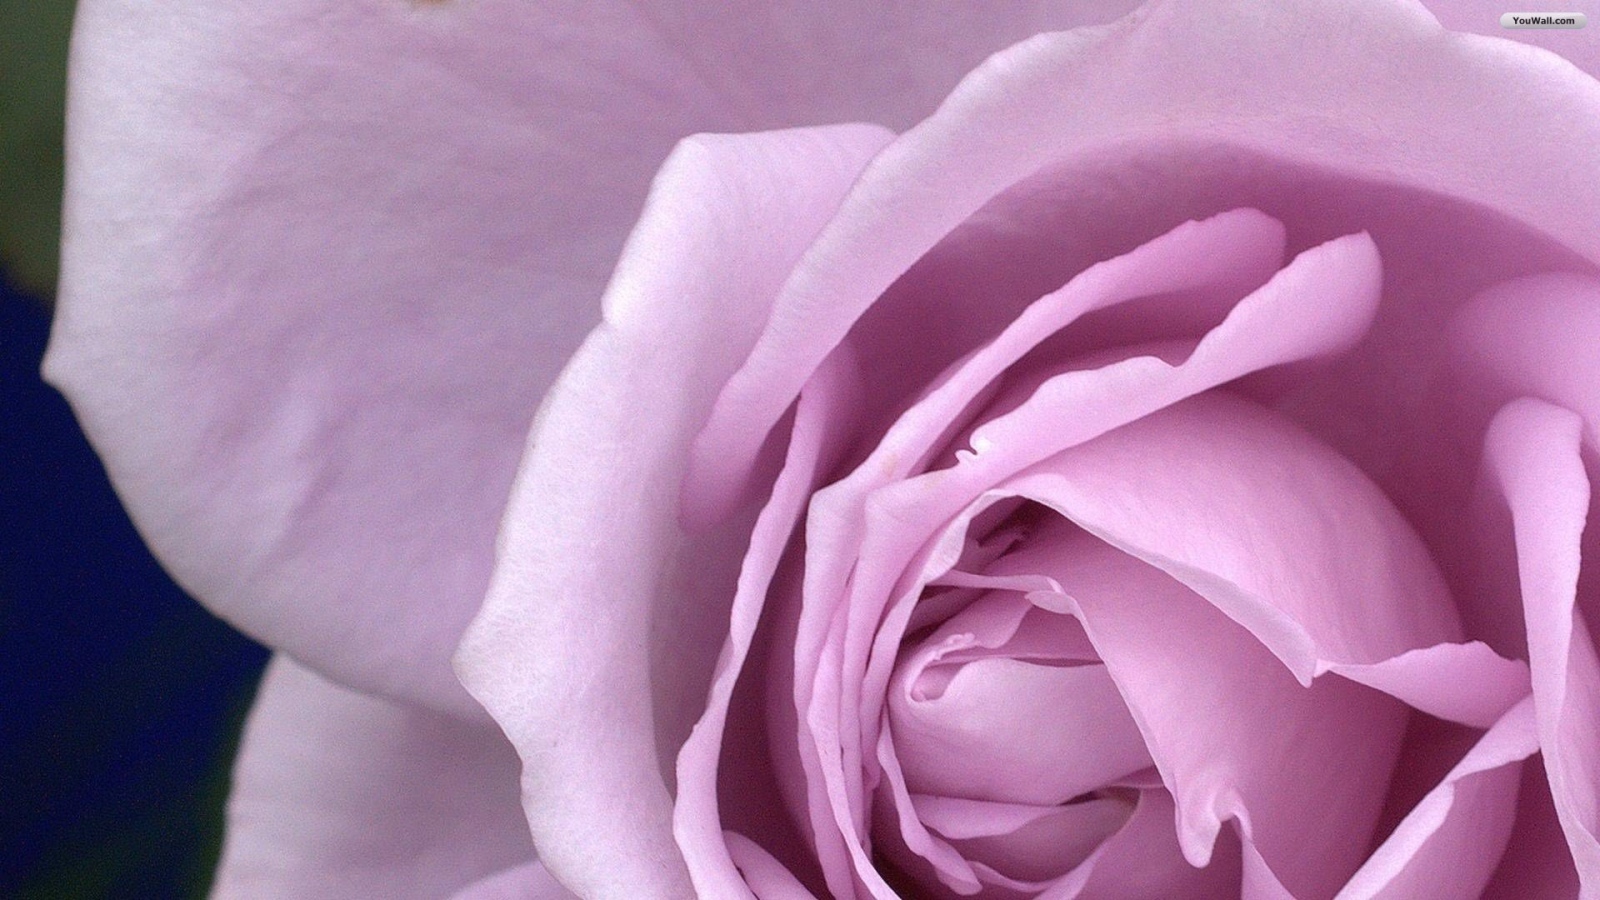 Big purple rose close up